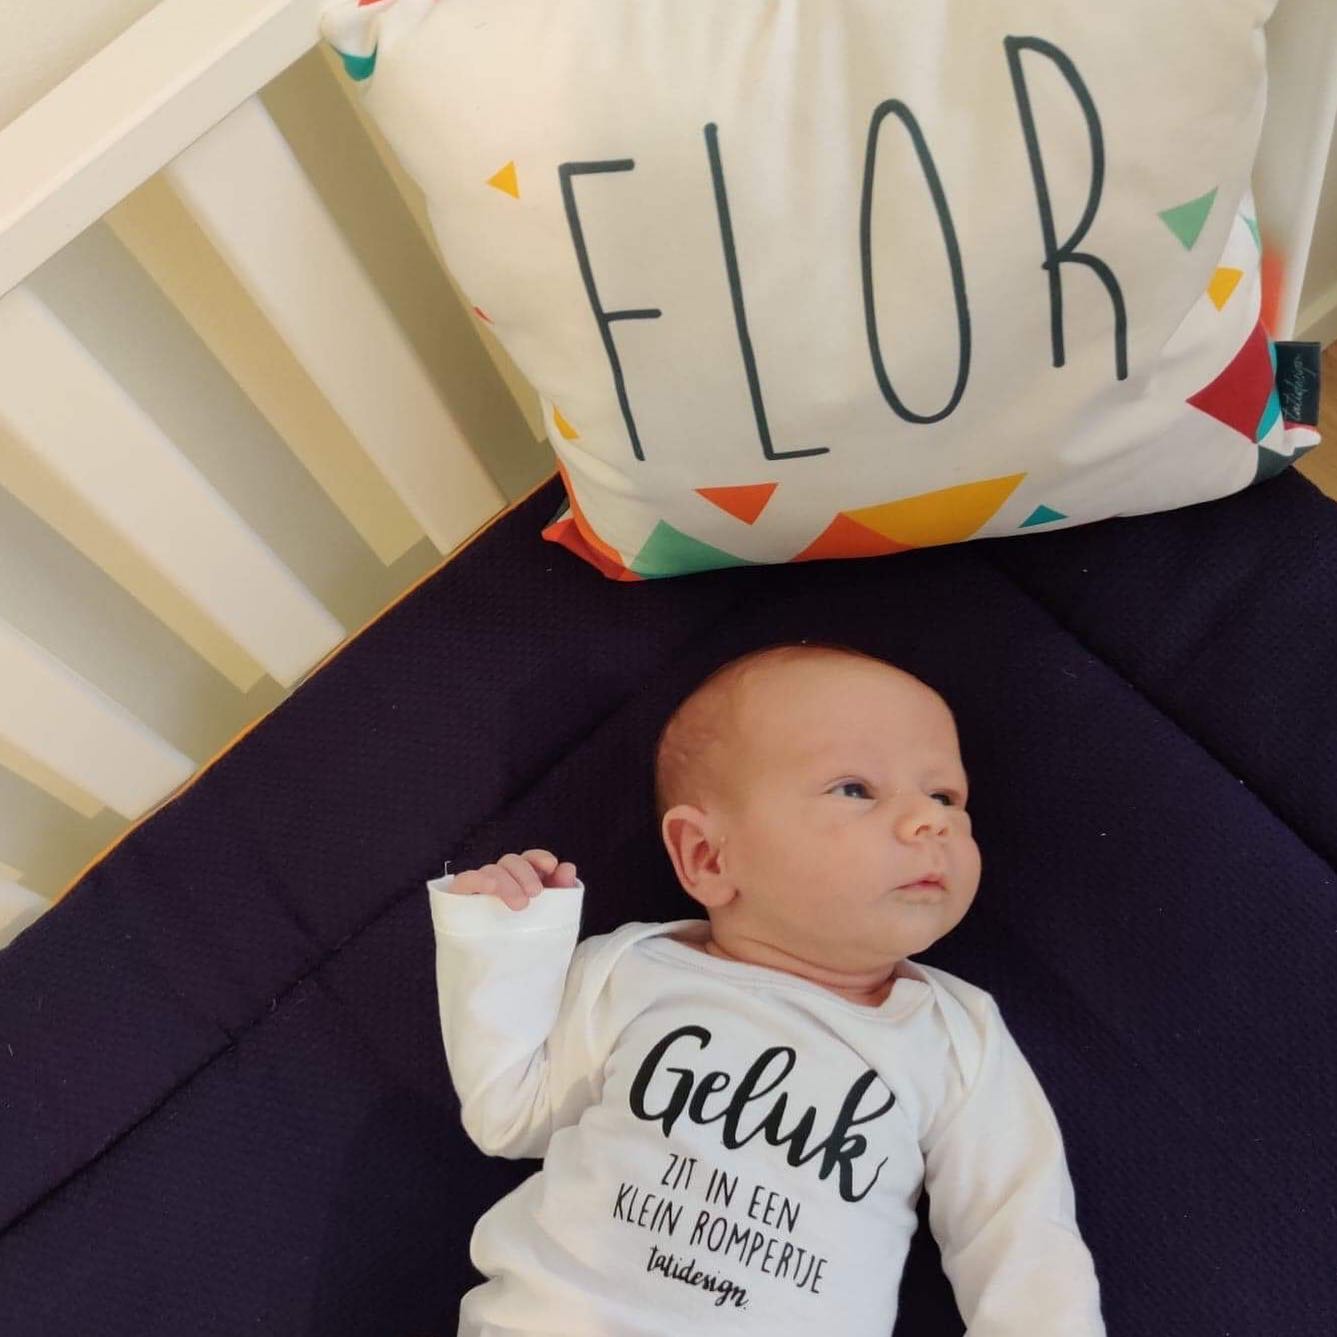 flor-baby-geboortekaartje-tatidesign